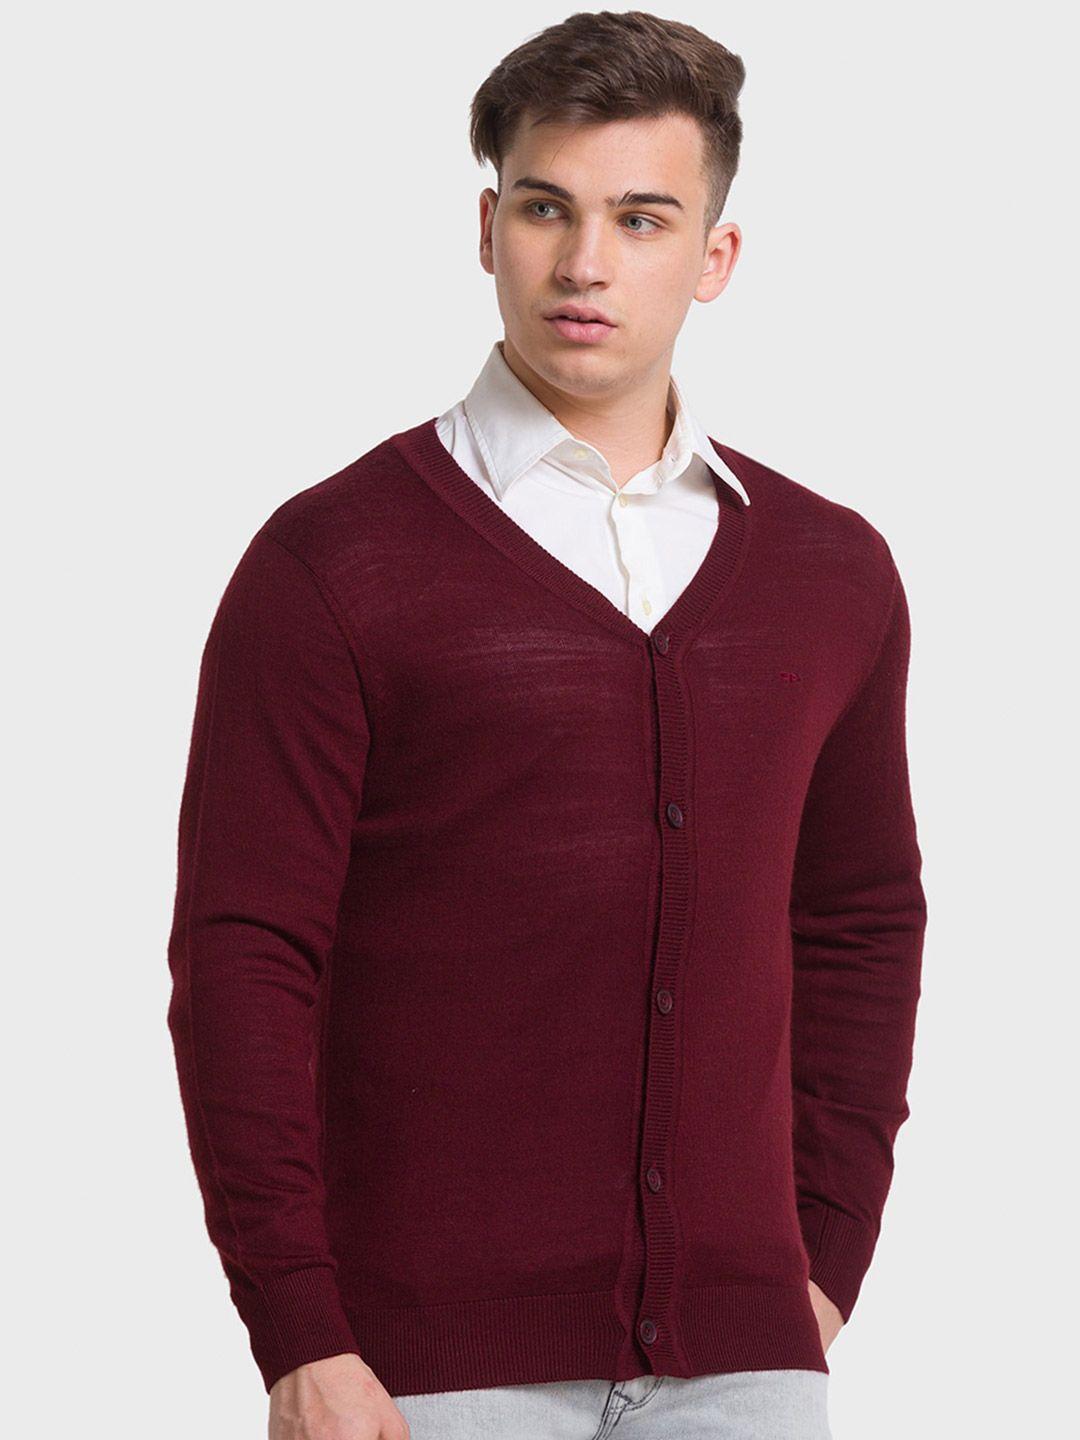 colorplus men plus size v neck cardigan sweater